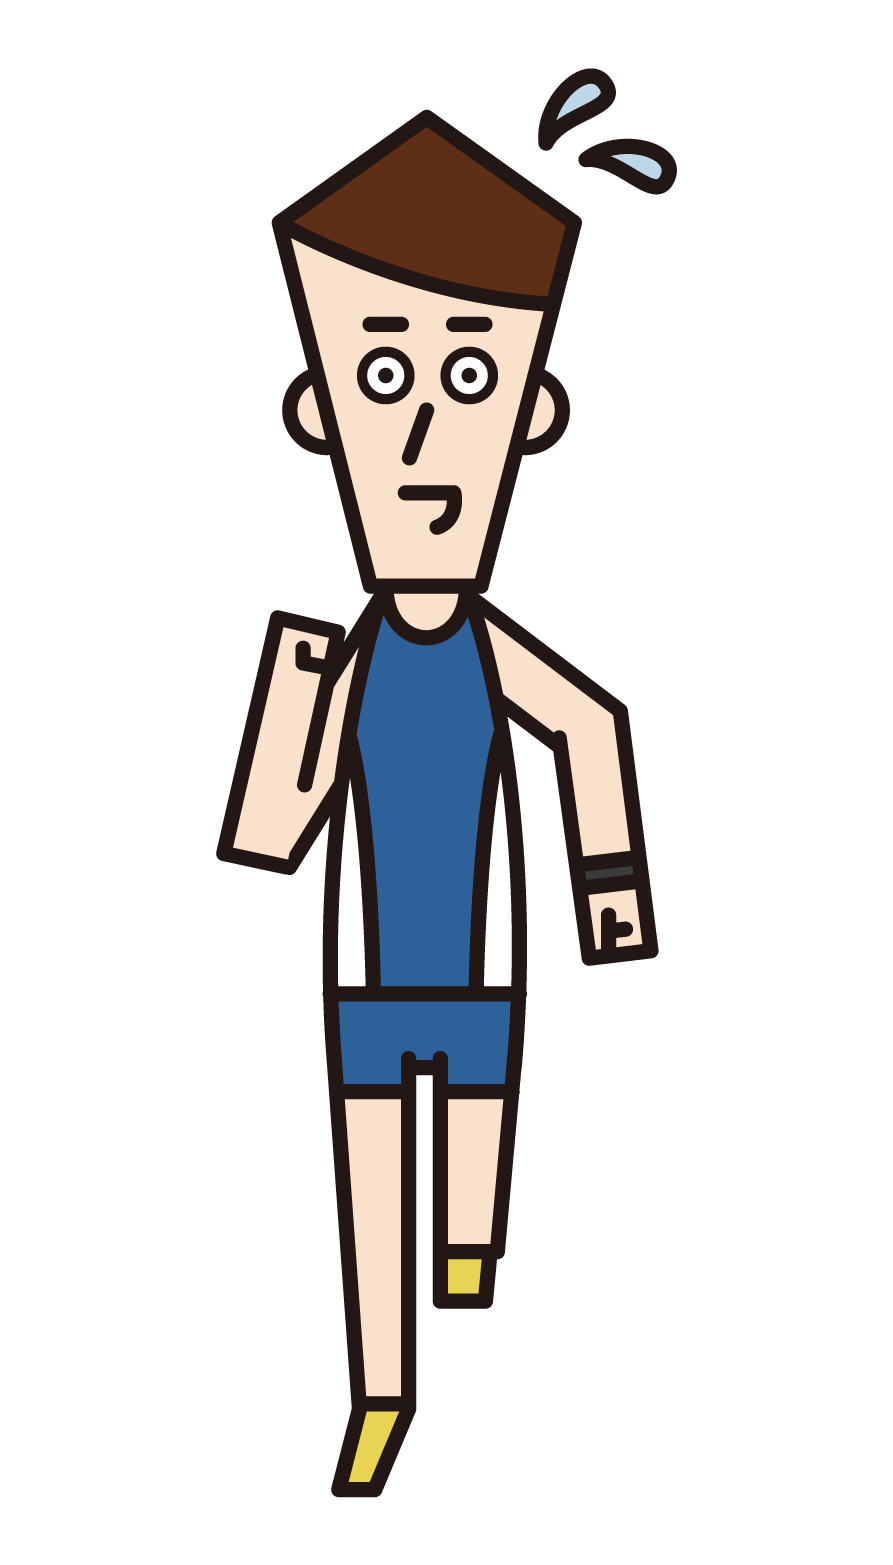 Illustration of a marathon runner (male) who runs hard